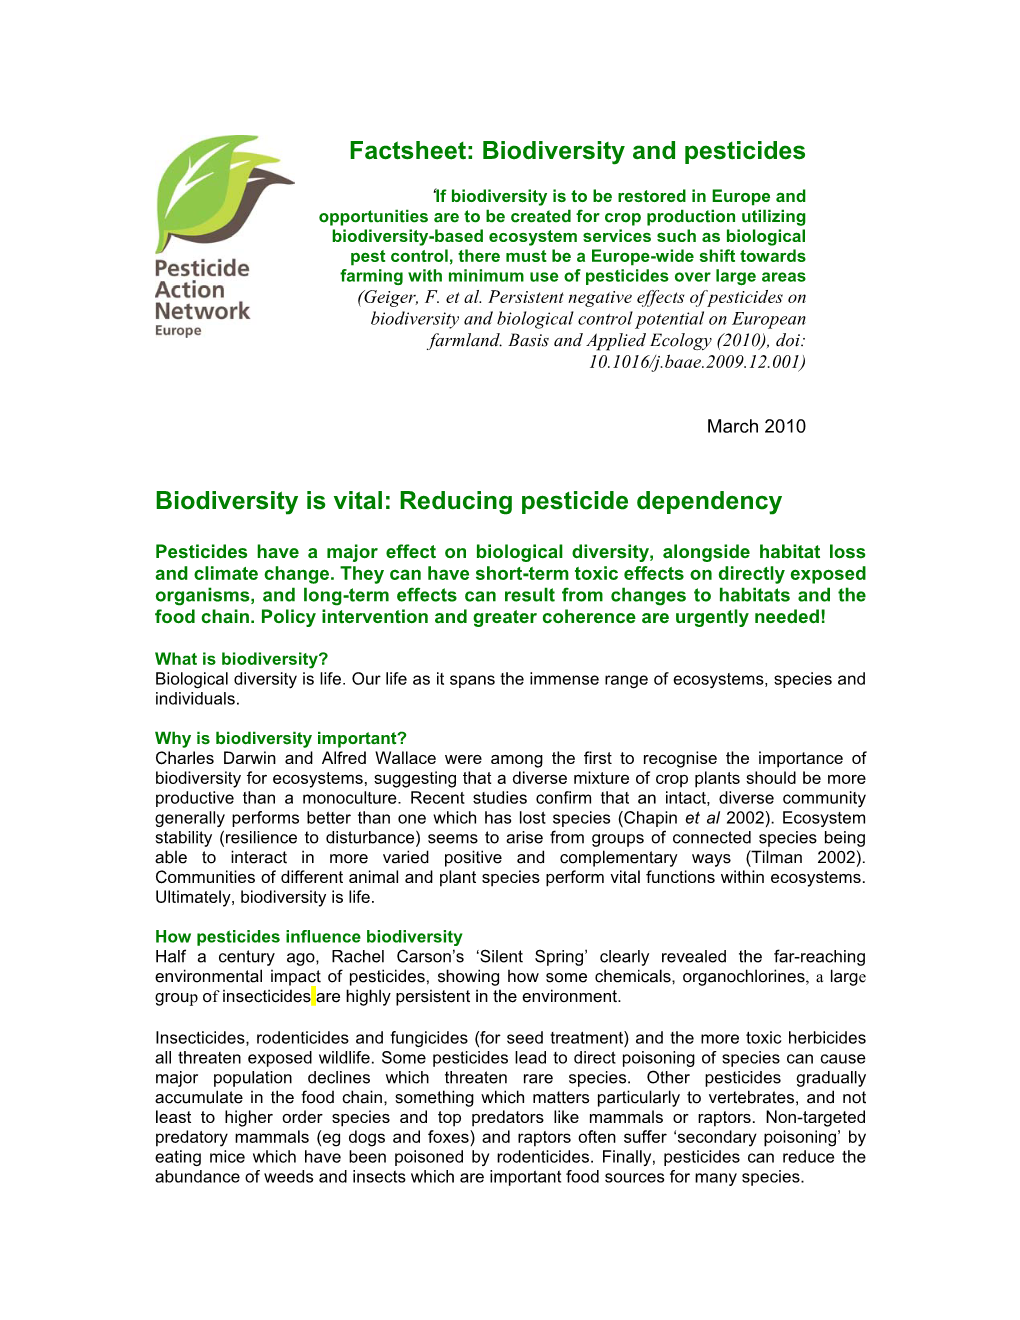 Factsheet: Biodiversity and Pesticides